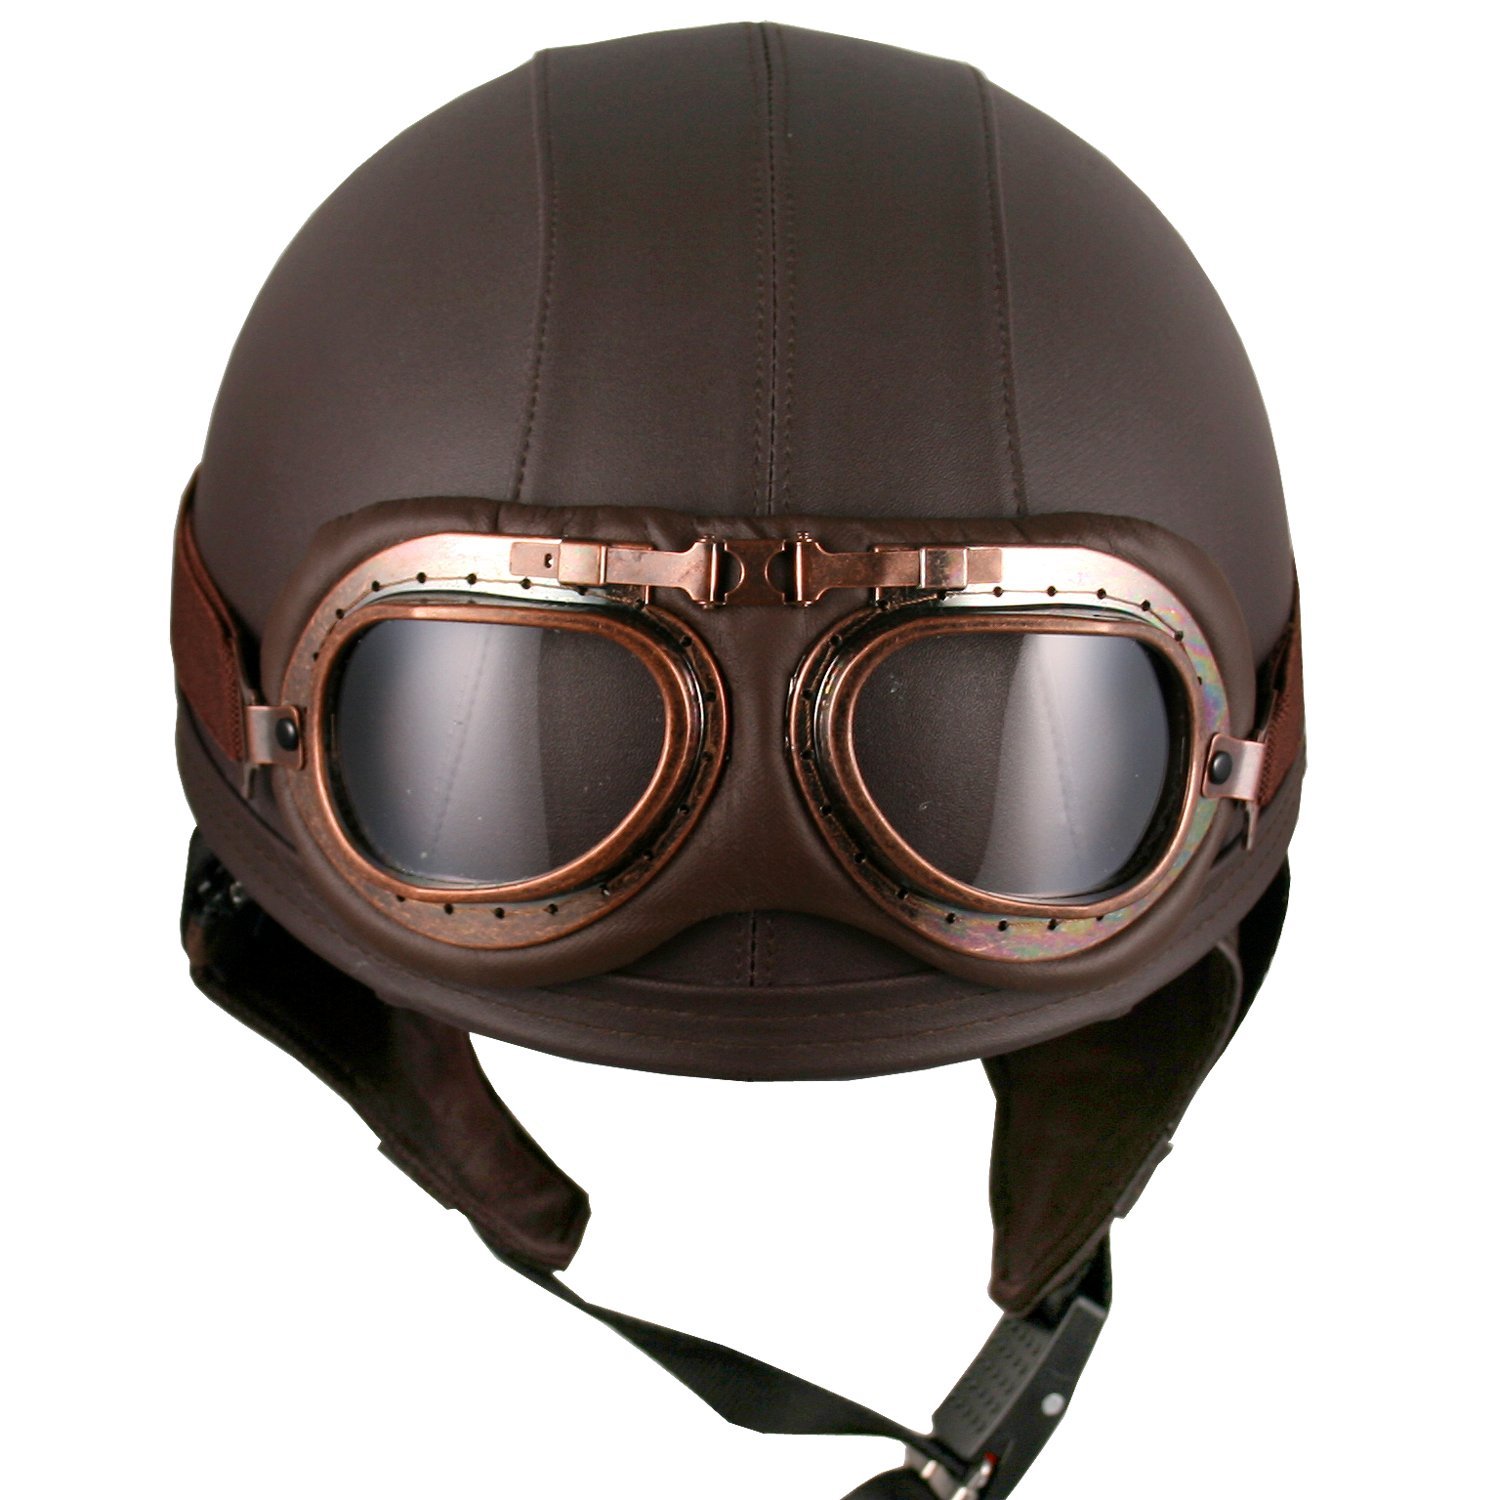 Amazon.com: Leather Brown Motorcycle Goggles Vintage Garman Style ...